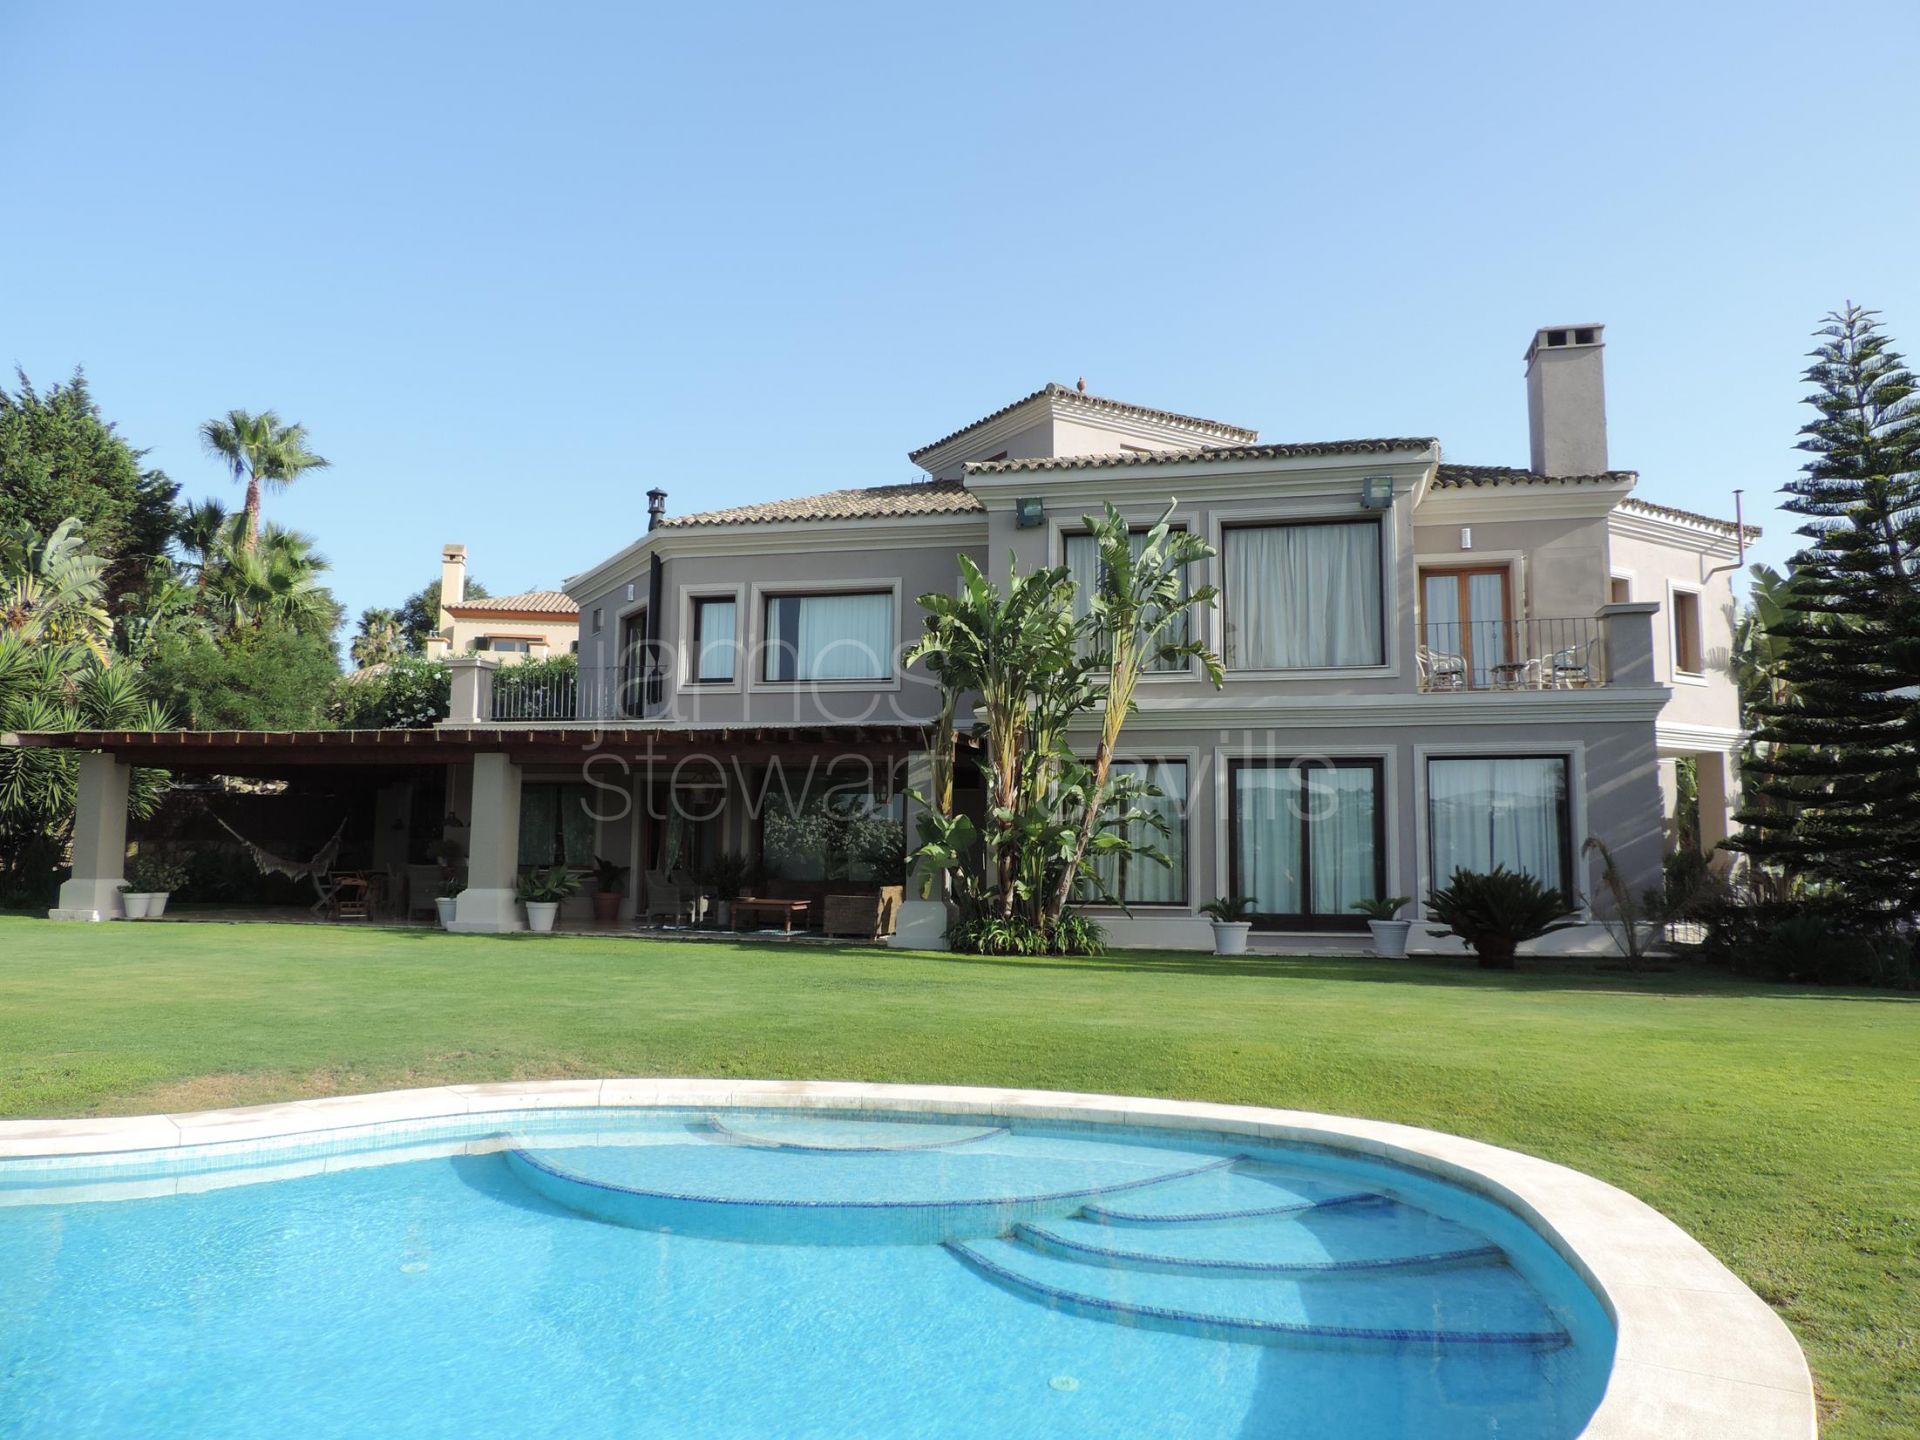 Stunning villa in golf area based in a 1235 m2 plot in Sotogrande Alto